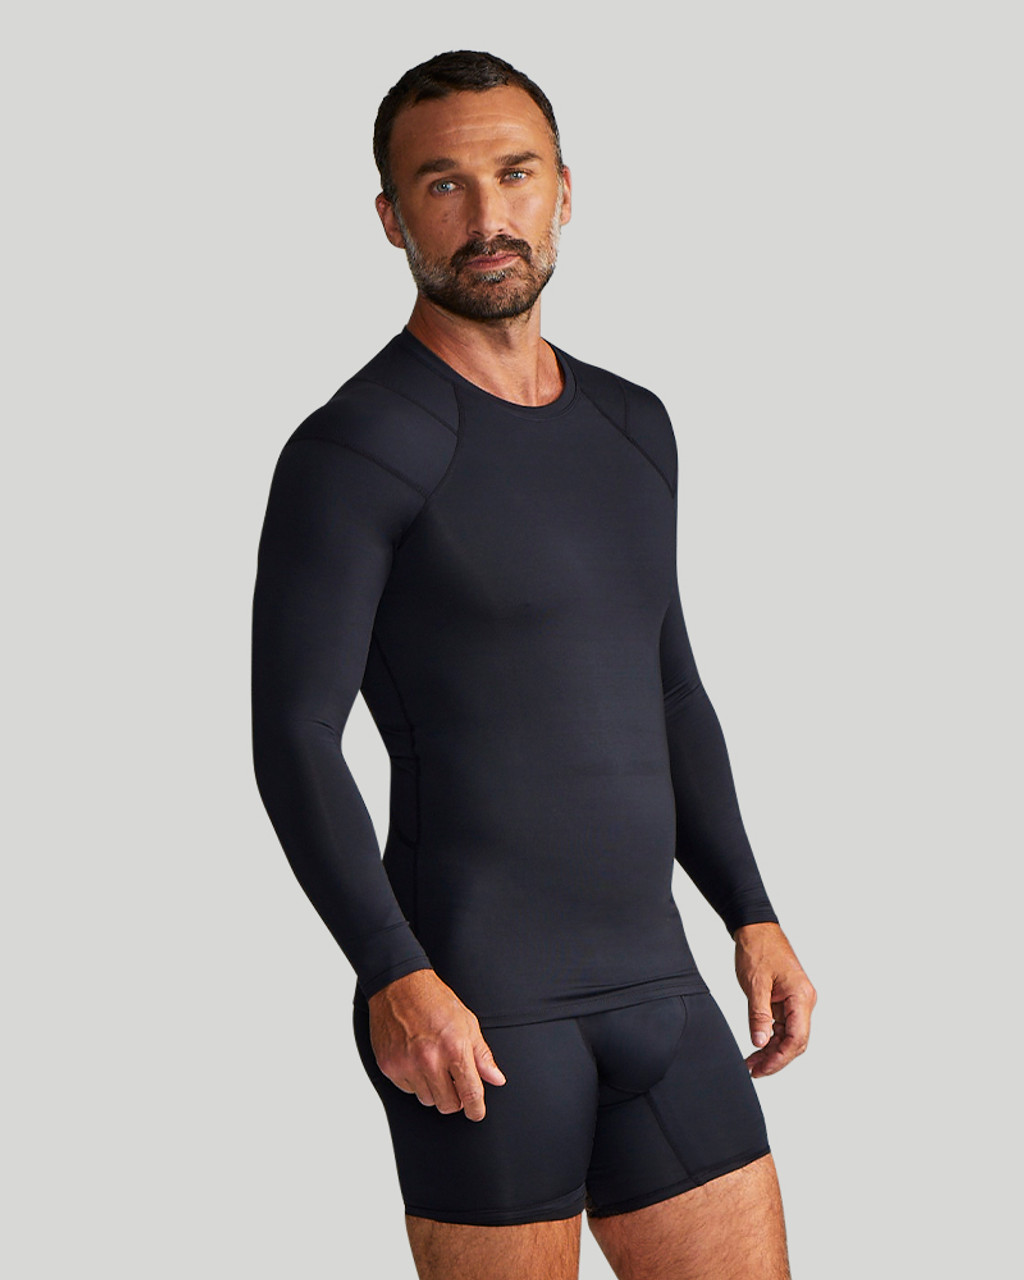 Buy Men's Men's Lite Compression T-shirt Top (Nylon) Skins For